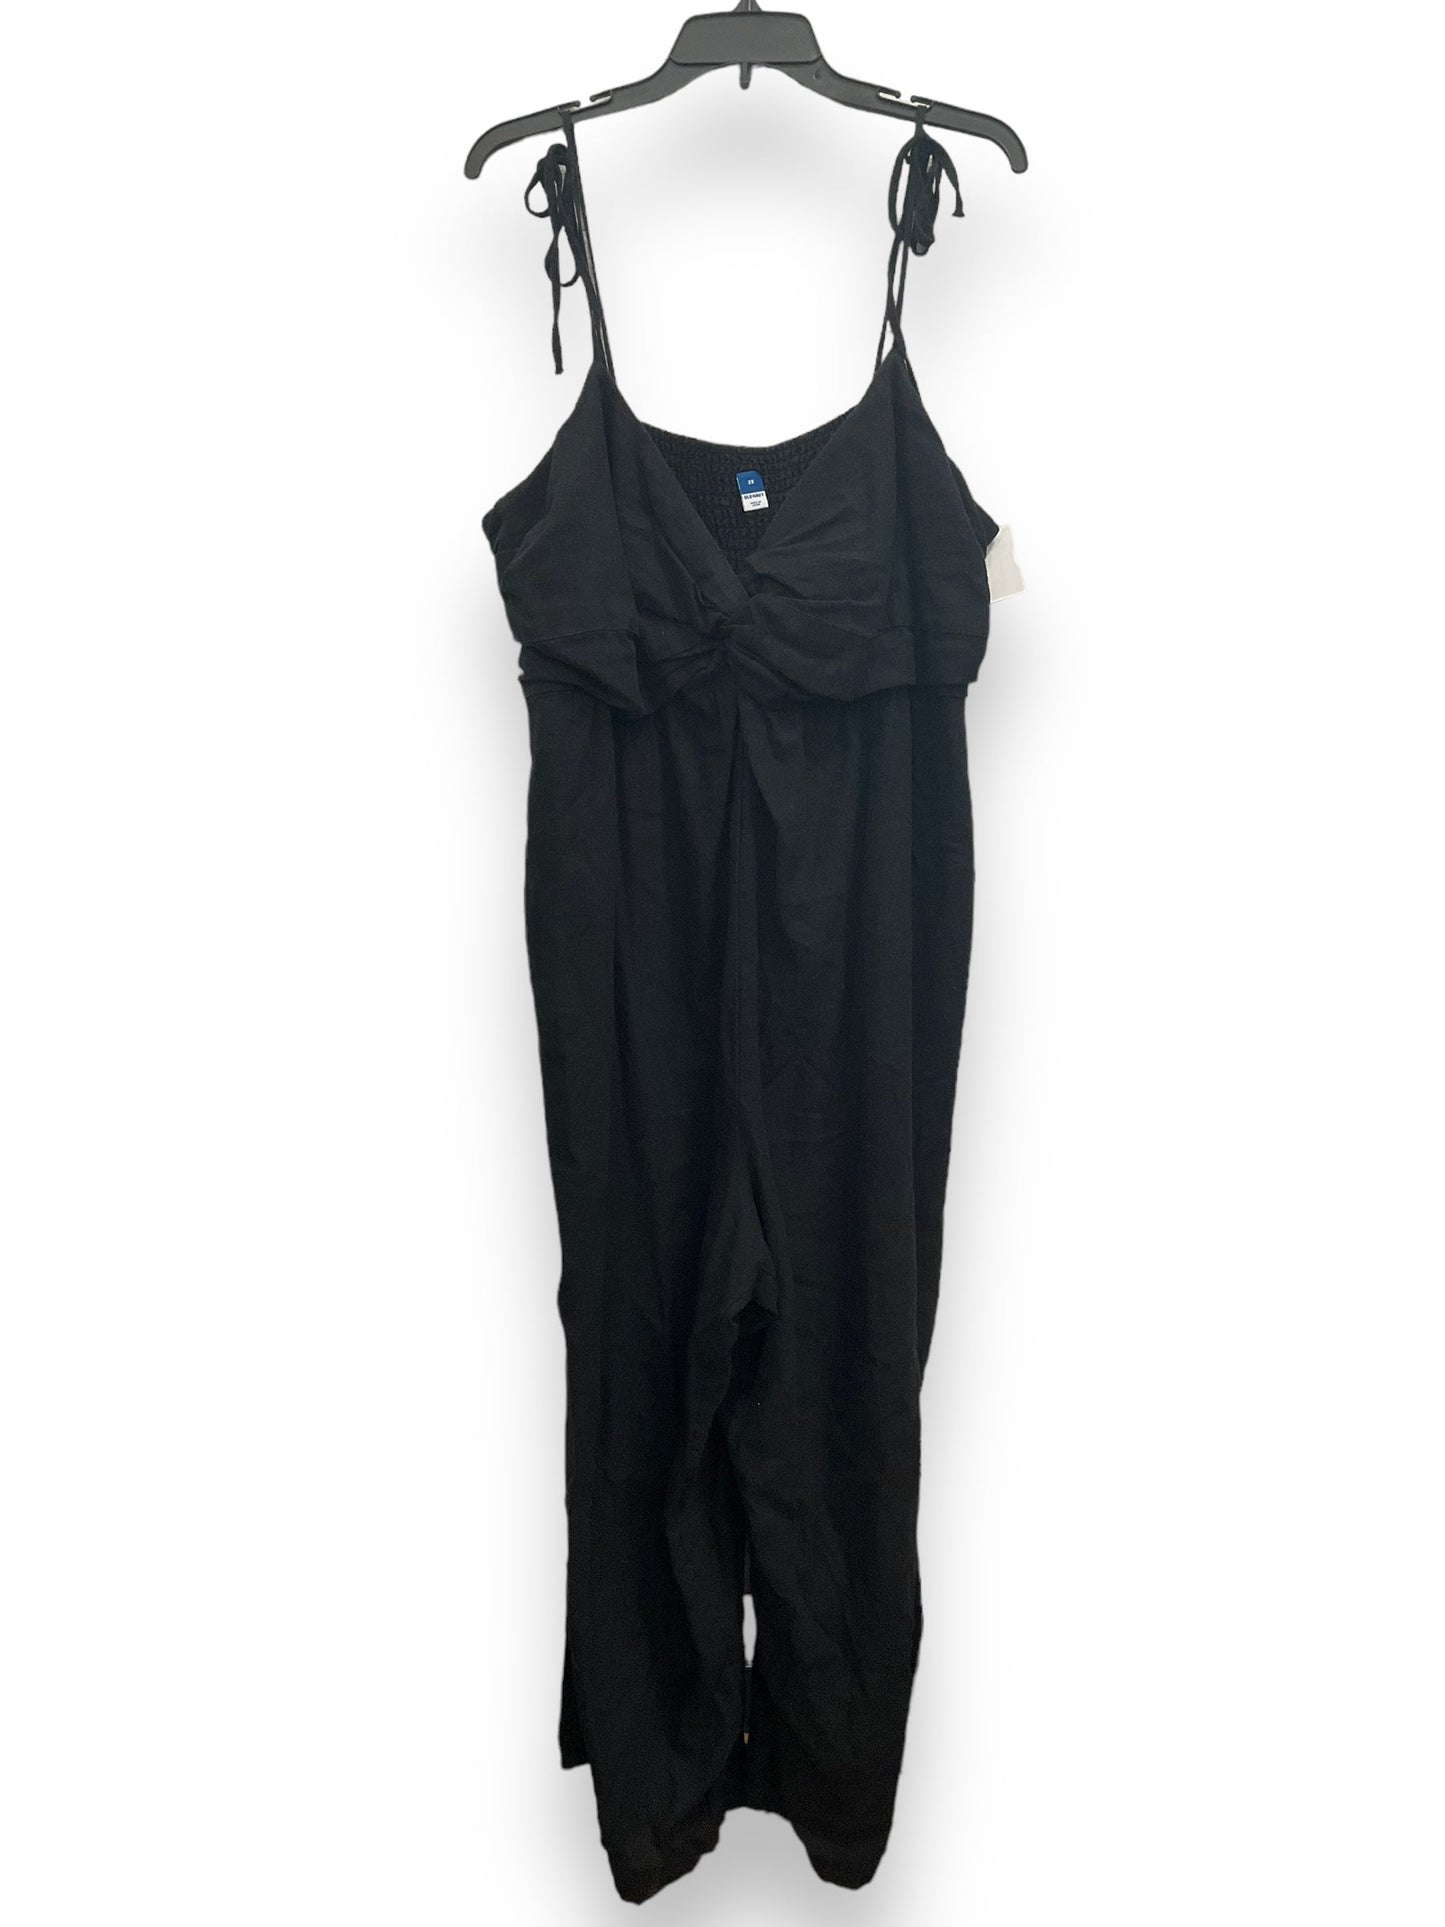 Black Jumpsuit Old Navy, Size 2x